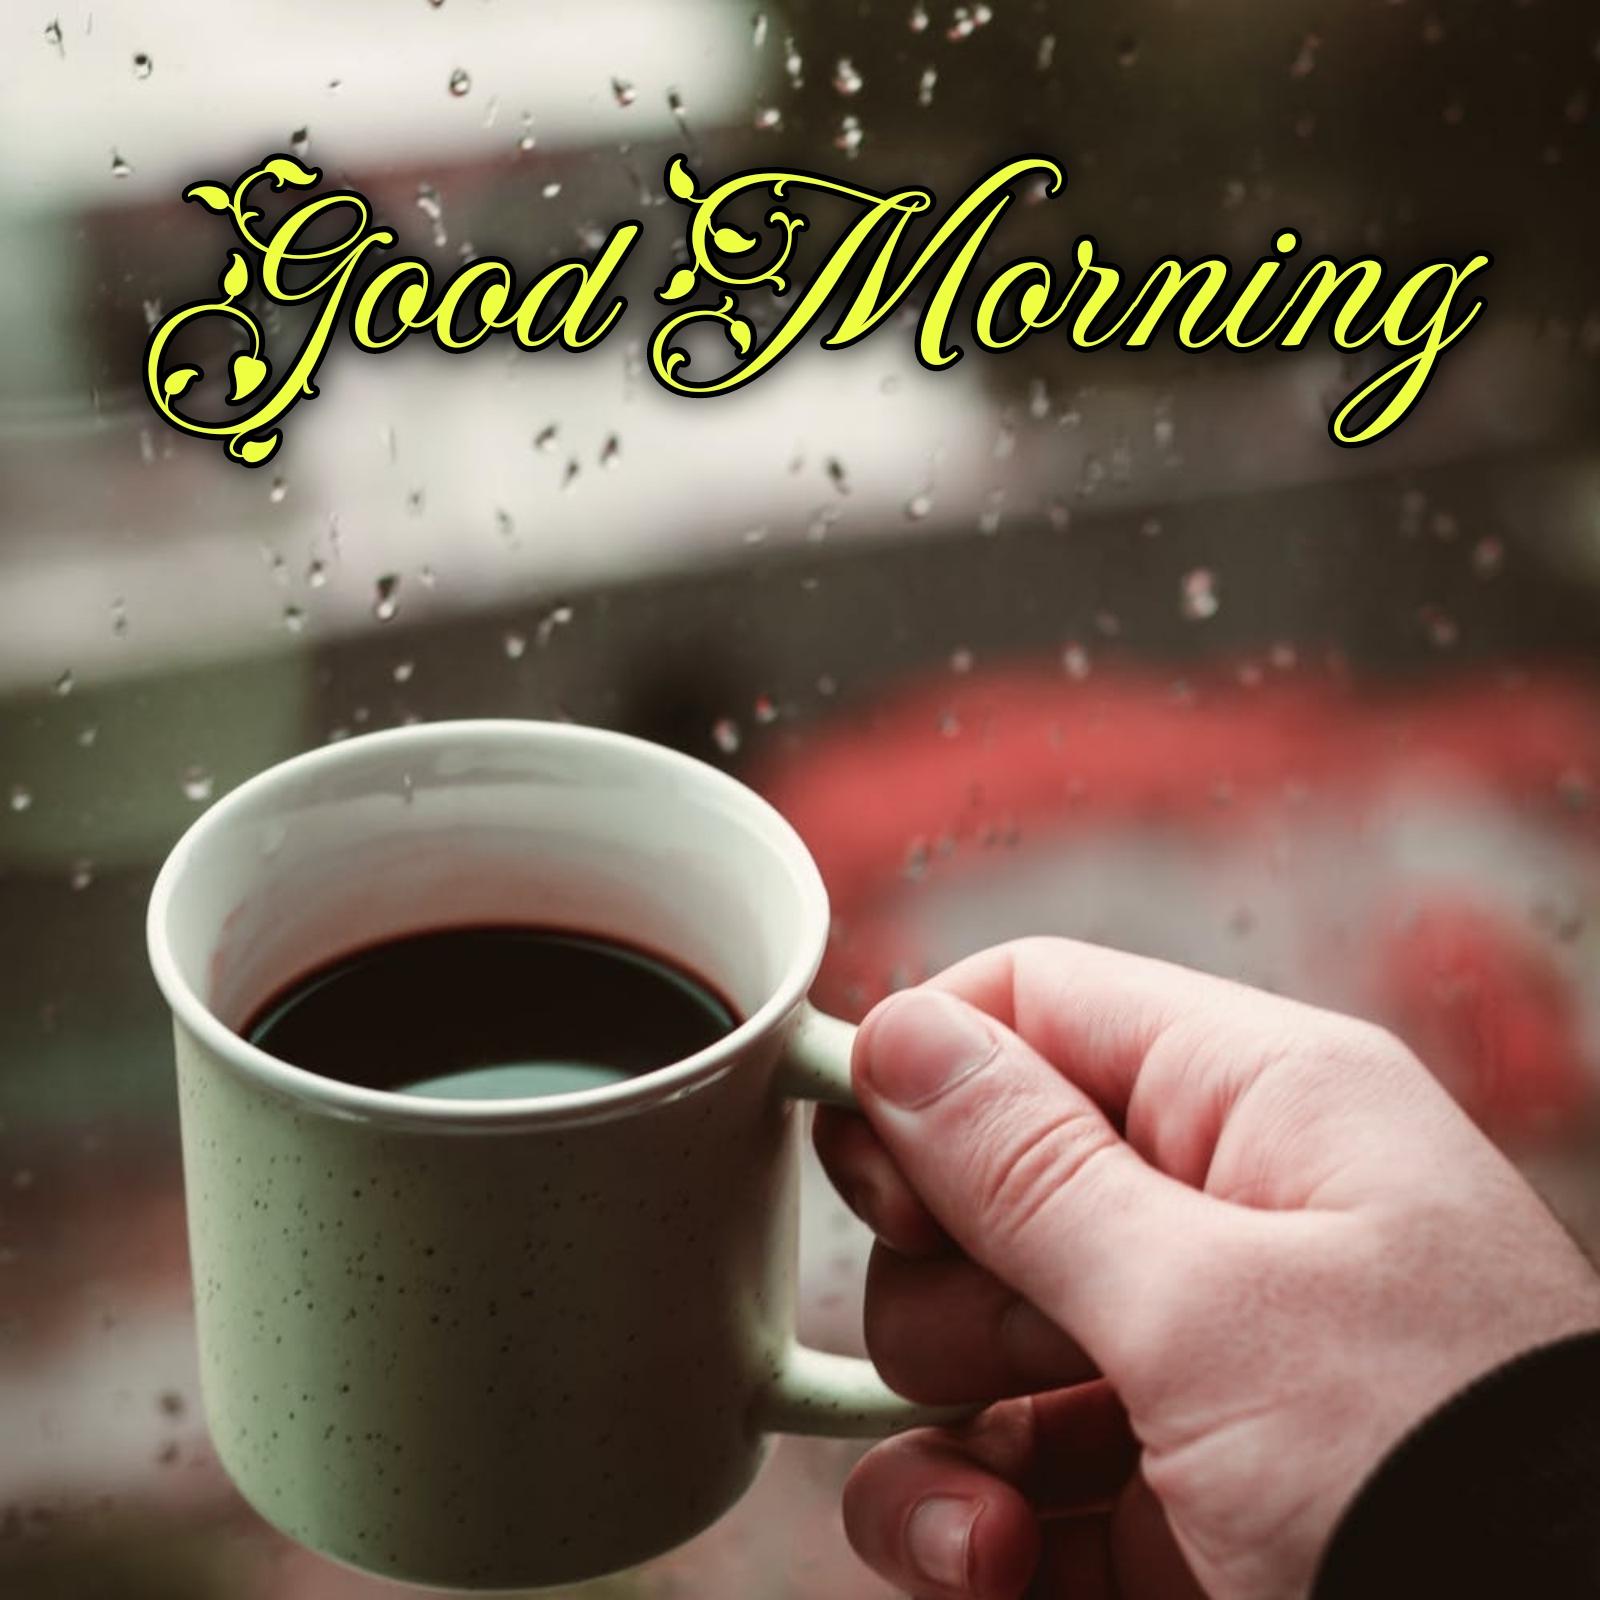 Good Morning Rain Coffee Image